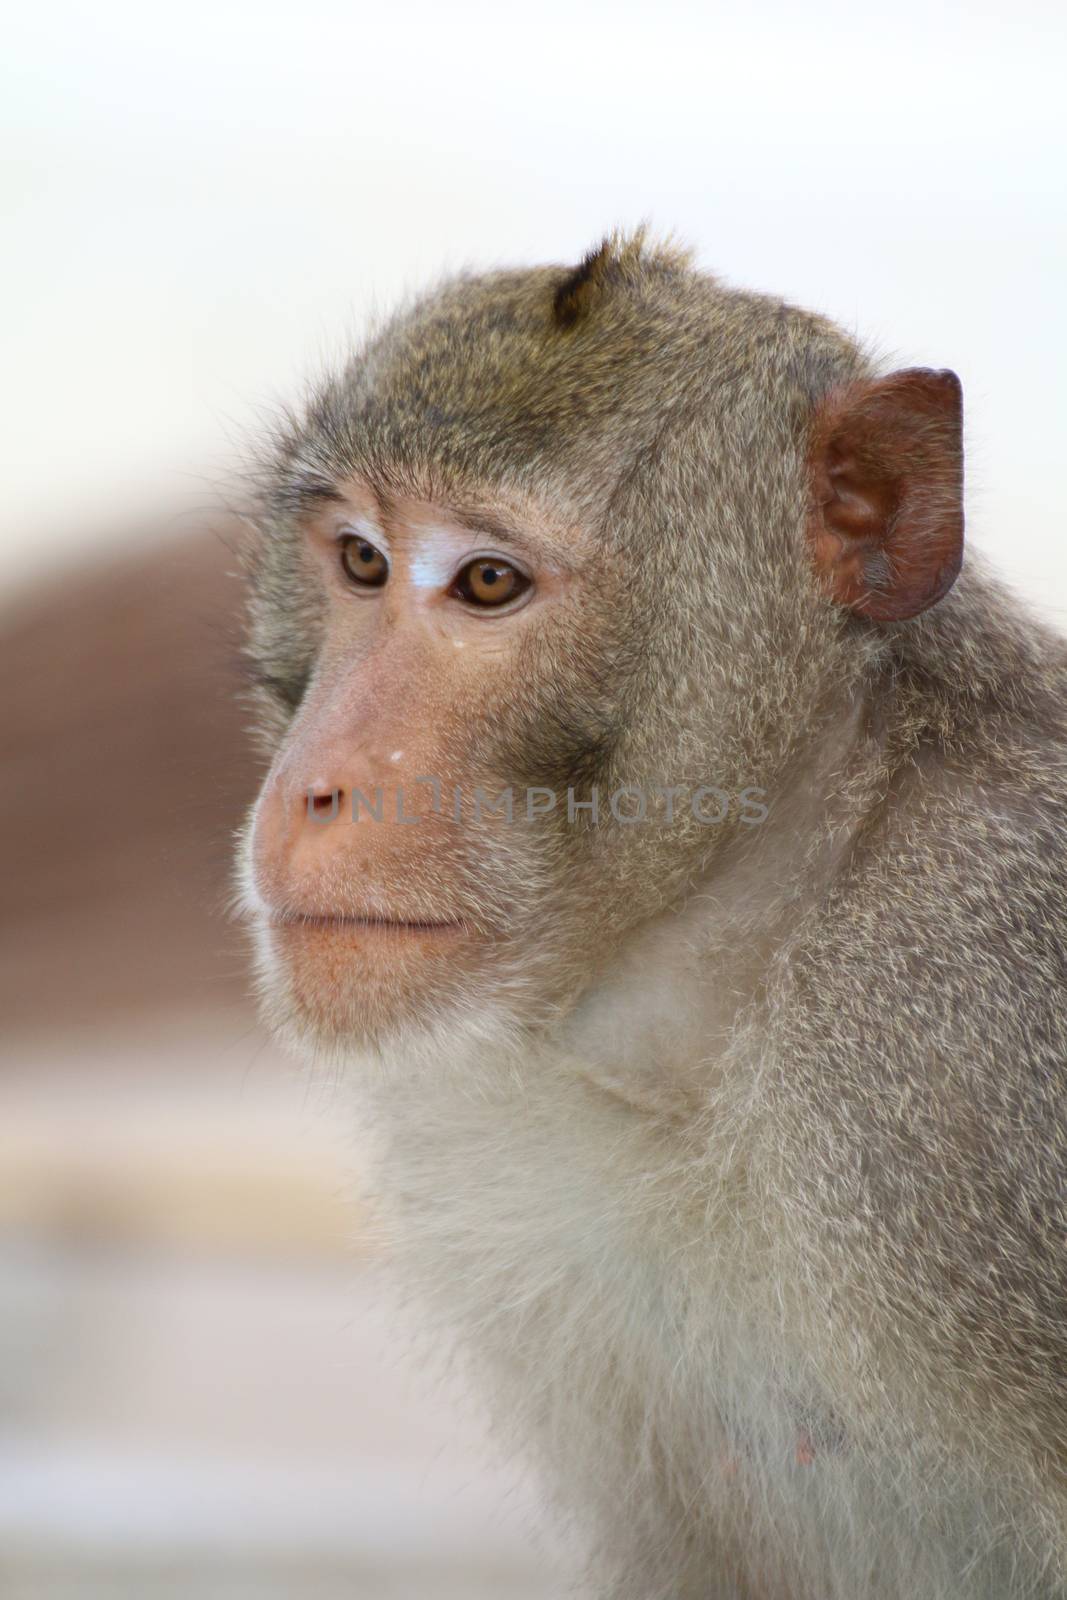 Monkey, Monkey face portrait, Jungle Monkey close up, Monkey Ape by cgdeaw